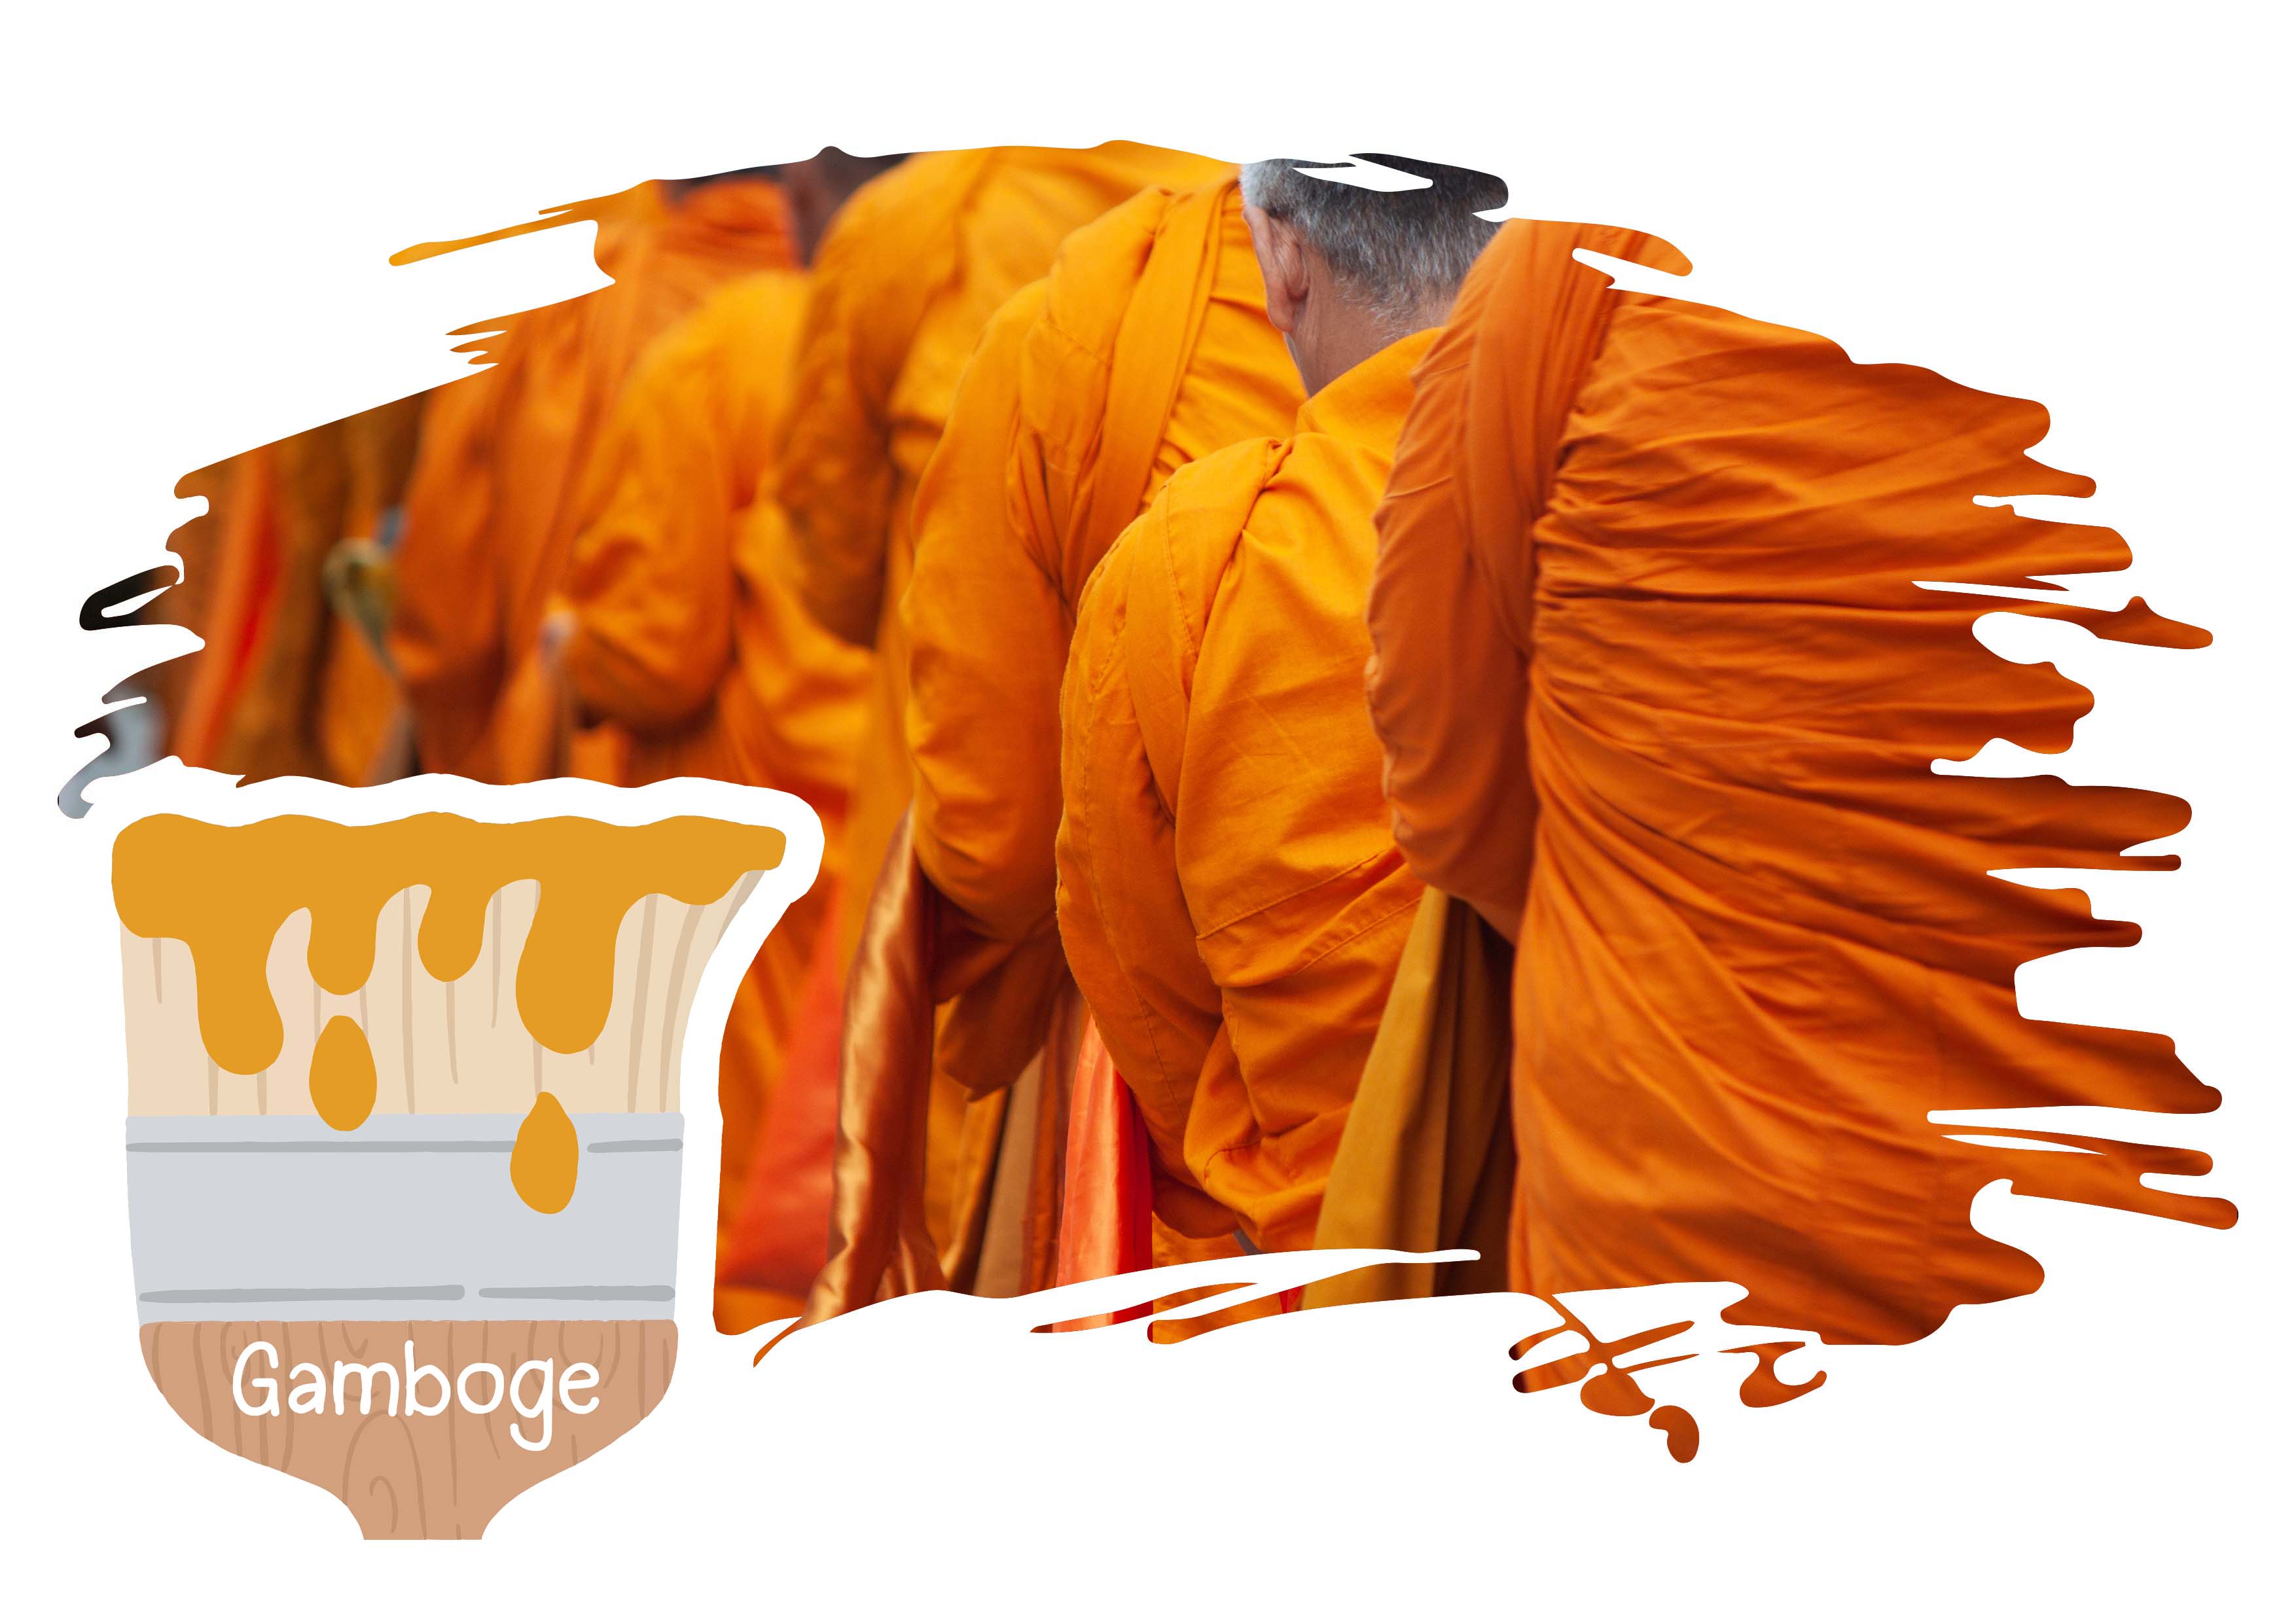 Gamboge, Thai Monk walk for Alms